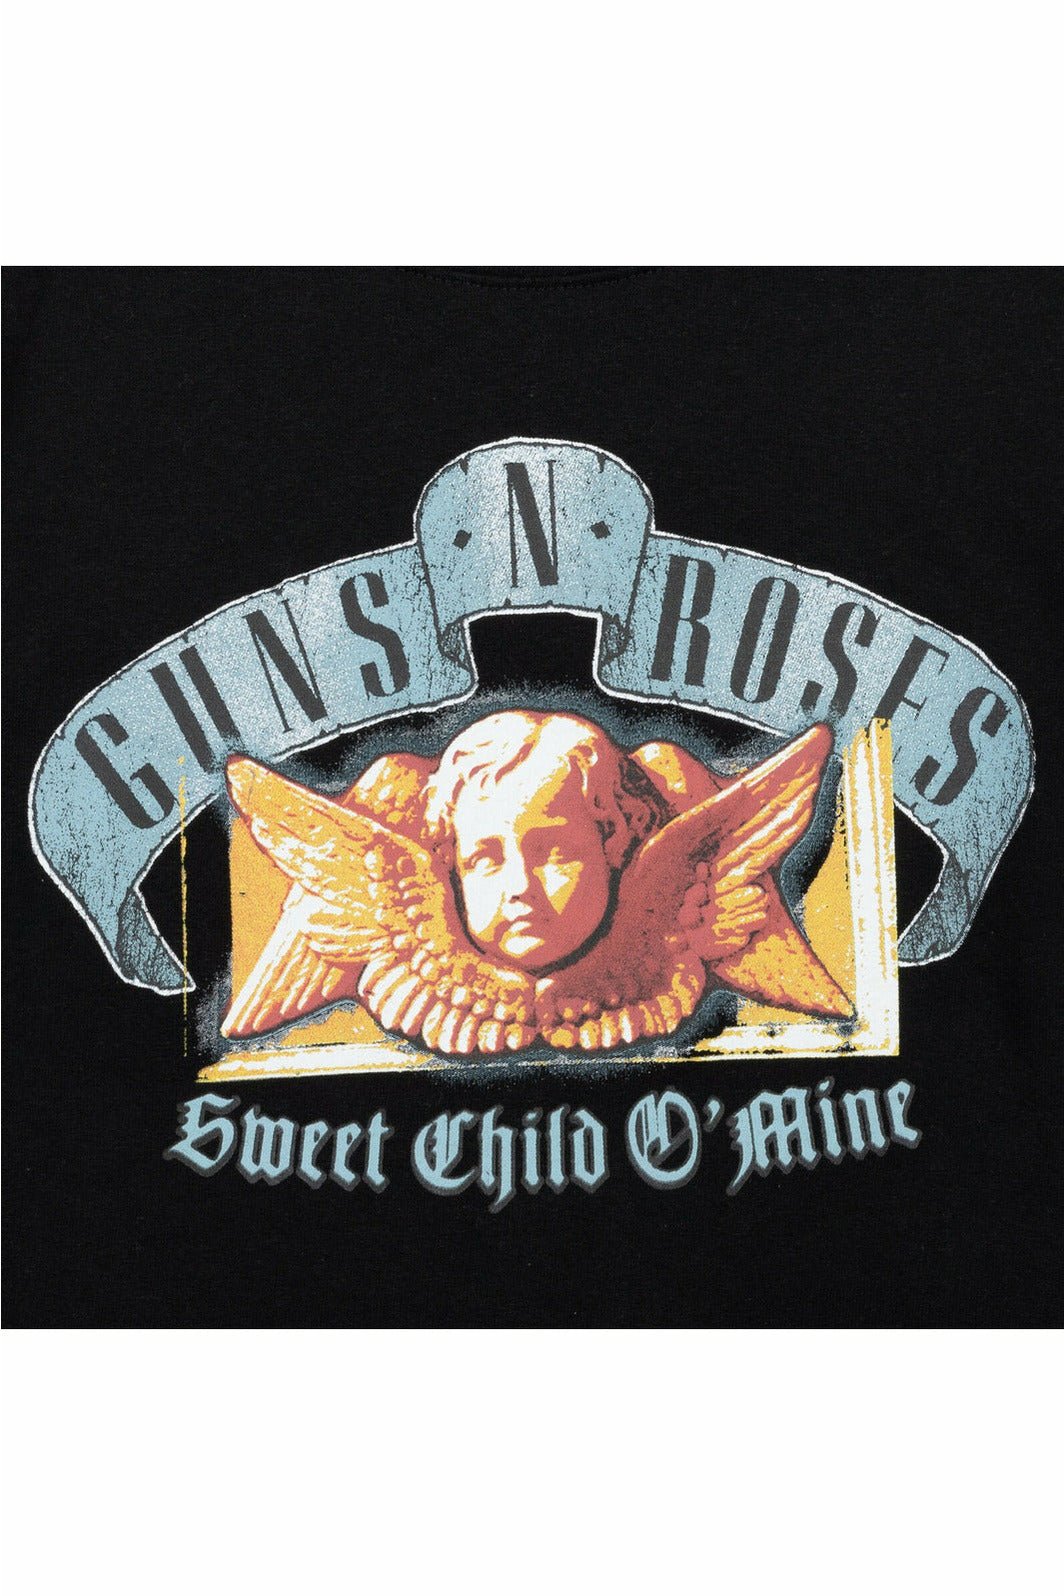 Guns N' Roses Fleece Pullover Sweatshirt - imagikids